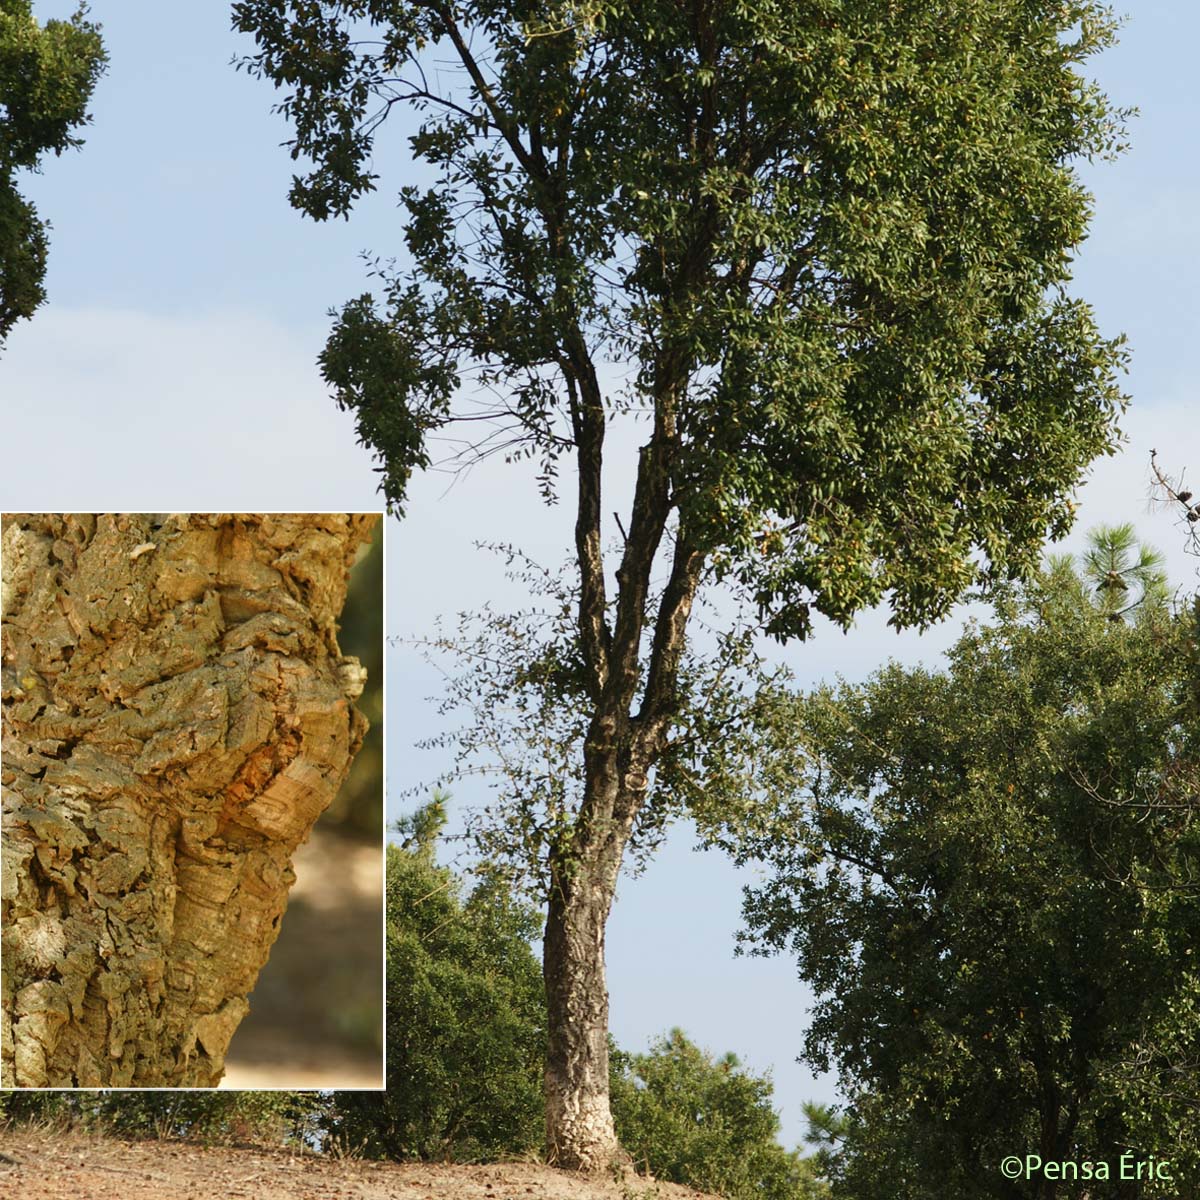 Chêne-liège - Quercus suber